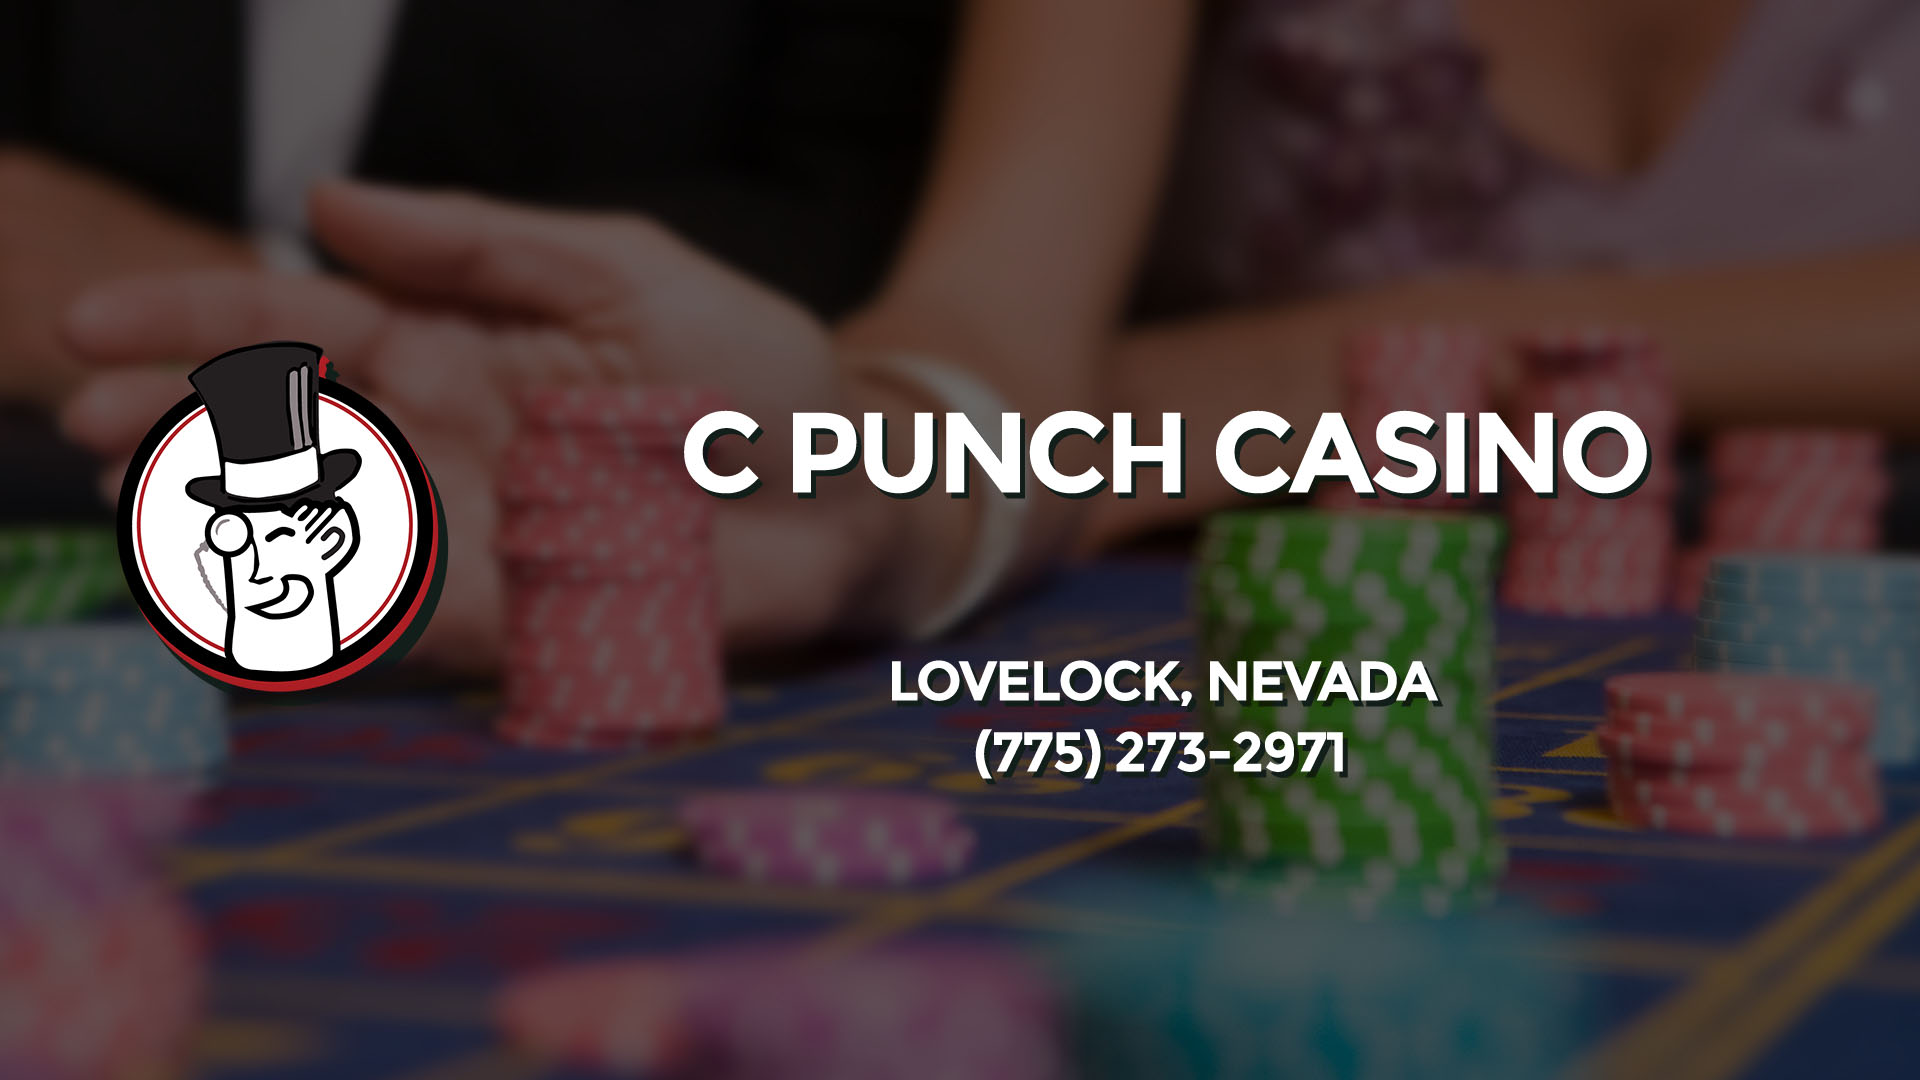 c punch inn and casino lovelock nv